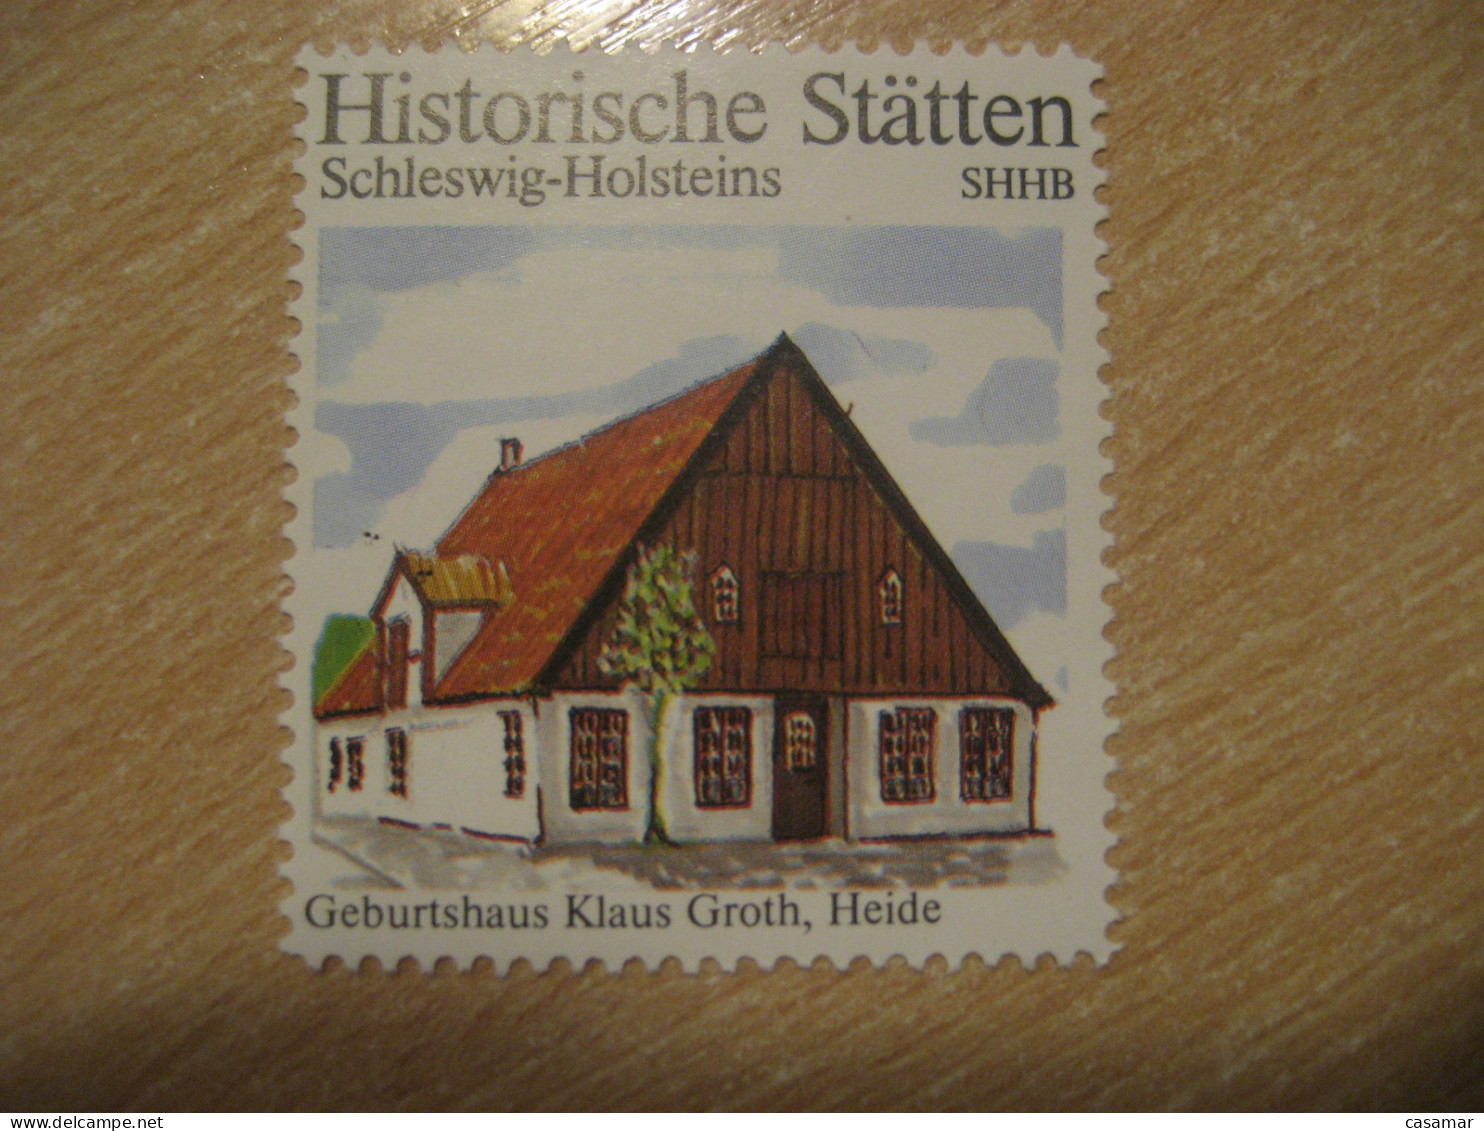 KLAUS GROTH Heide Birth House Poet Poetry Writer Dramatist Literature Poster Stamp Vignette GERMANY Label - Ecrivains